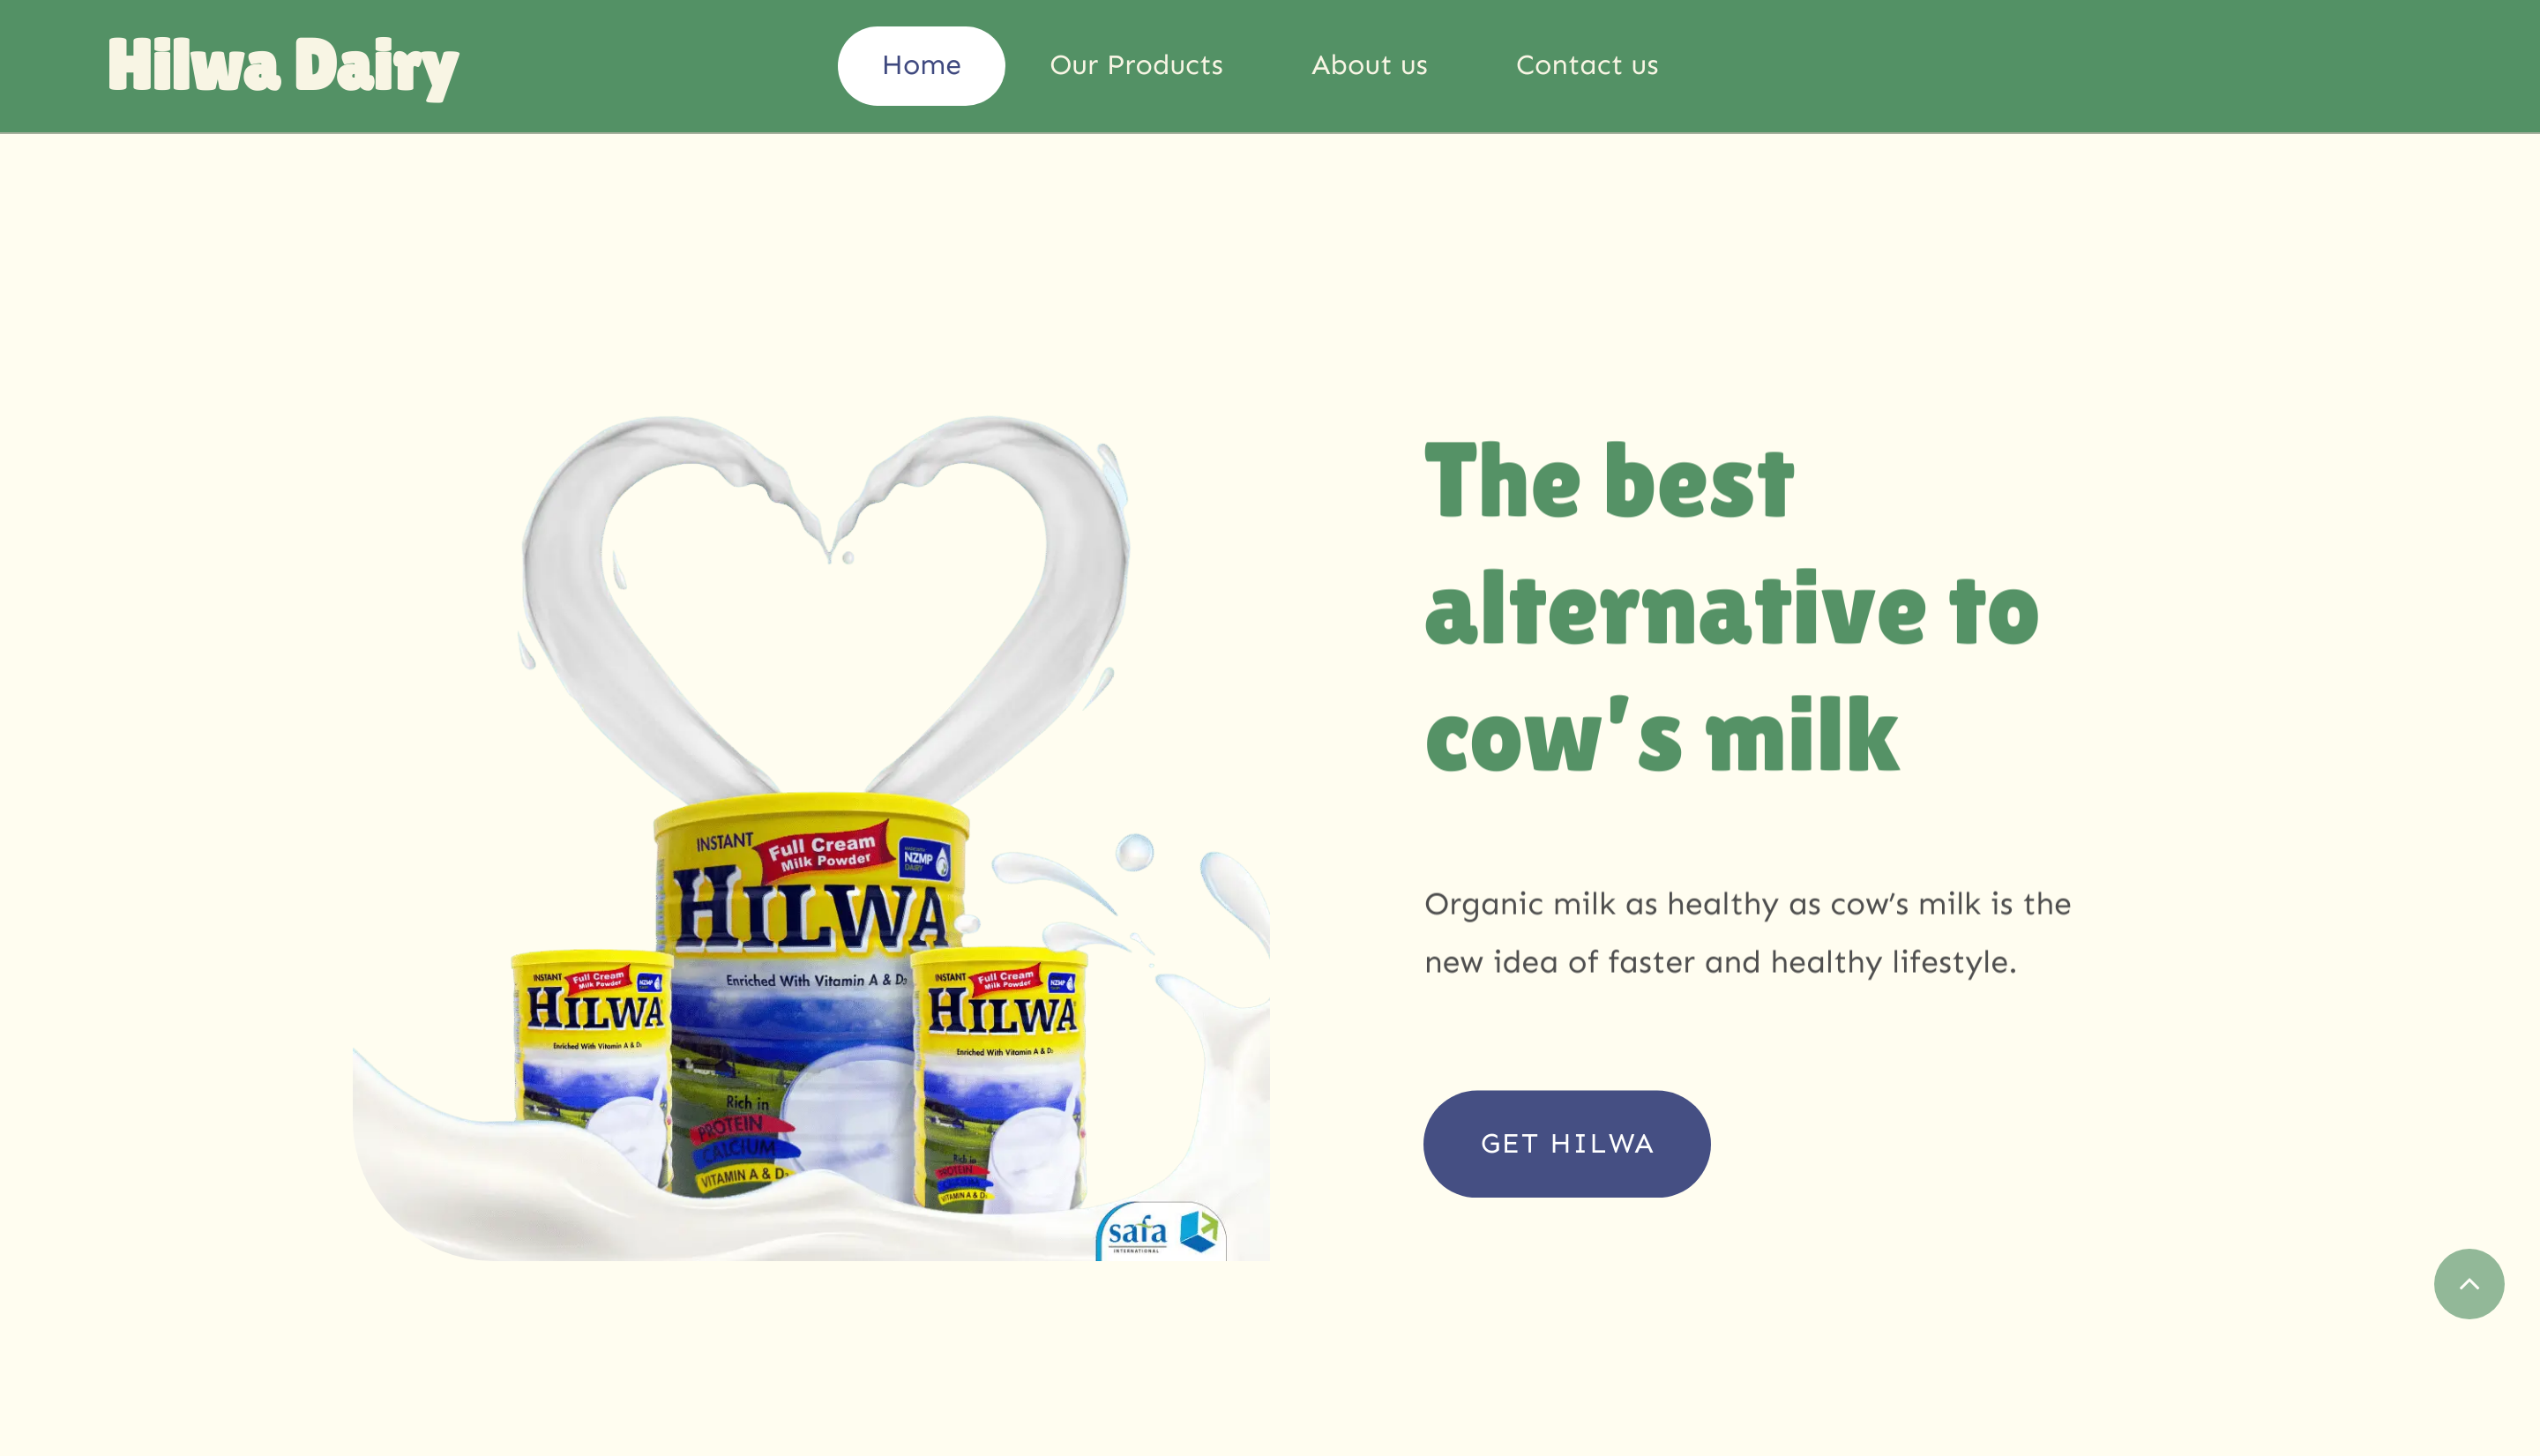 Hilwa Dairy